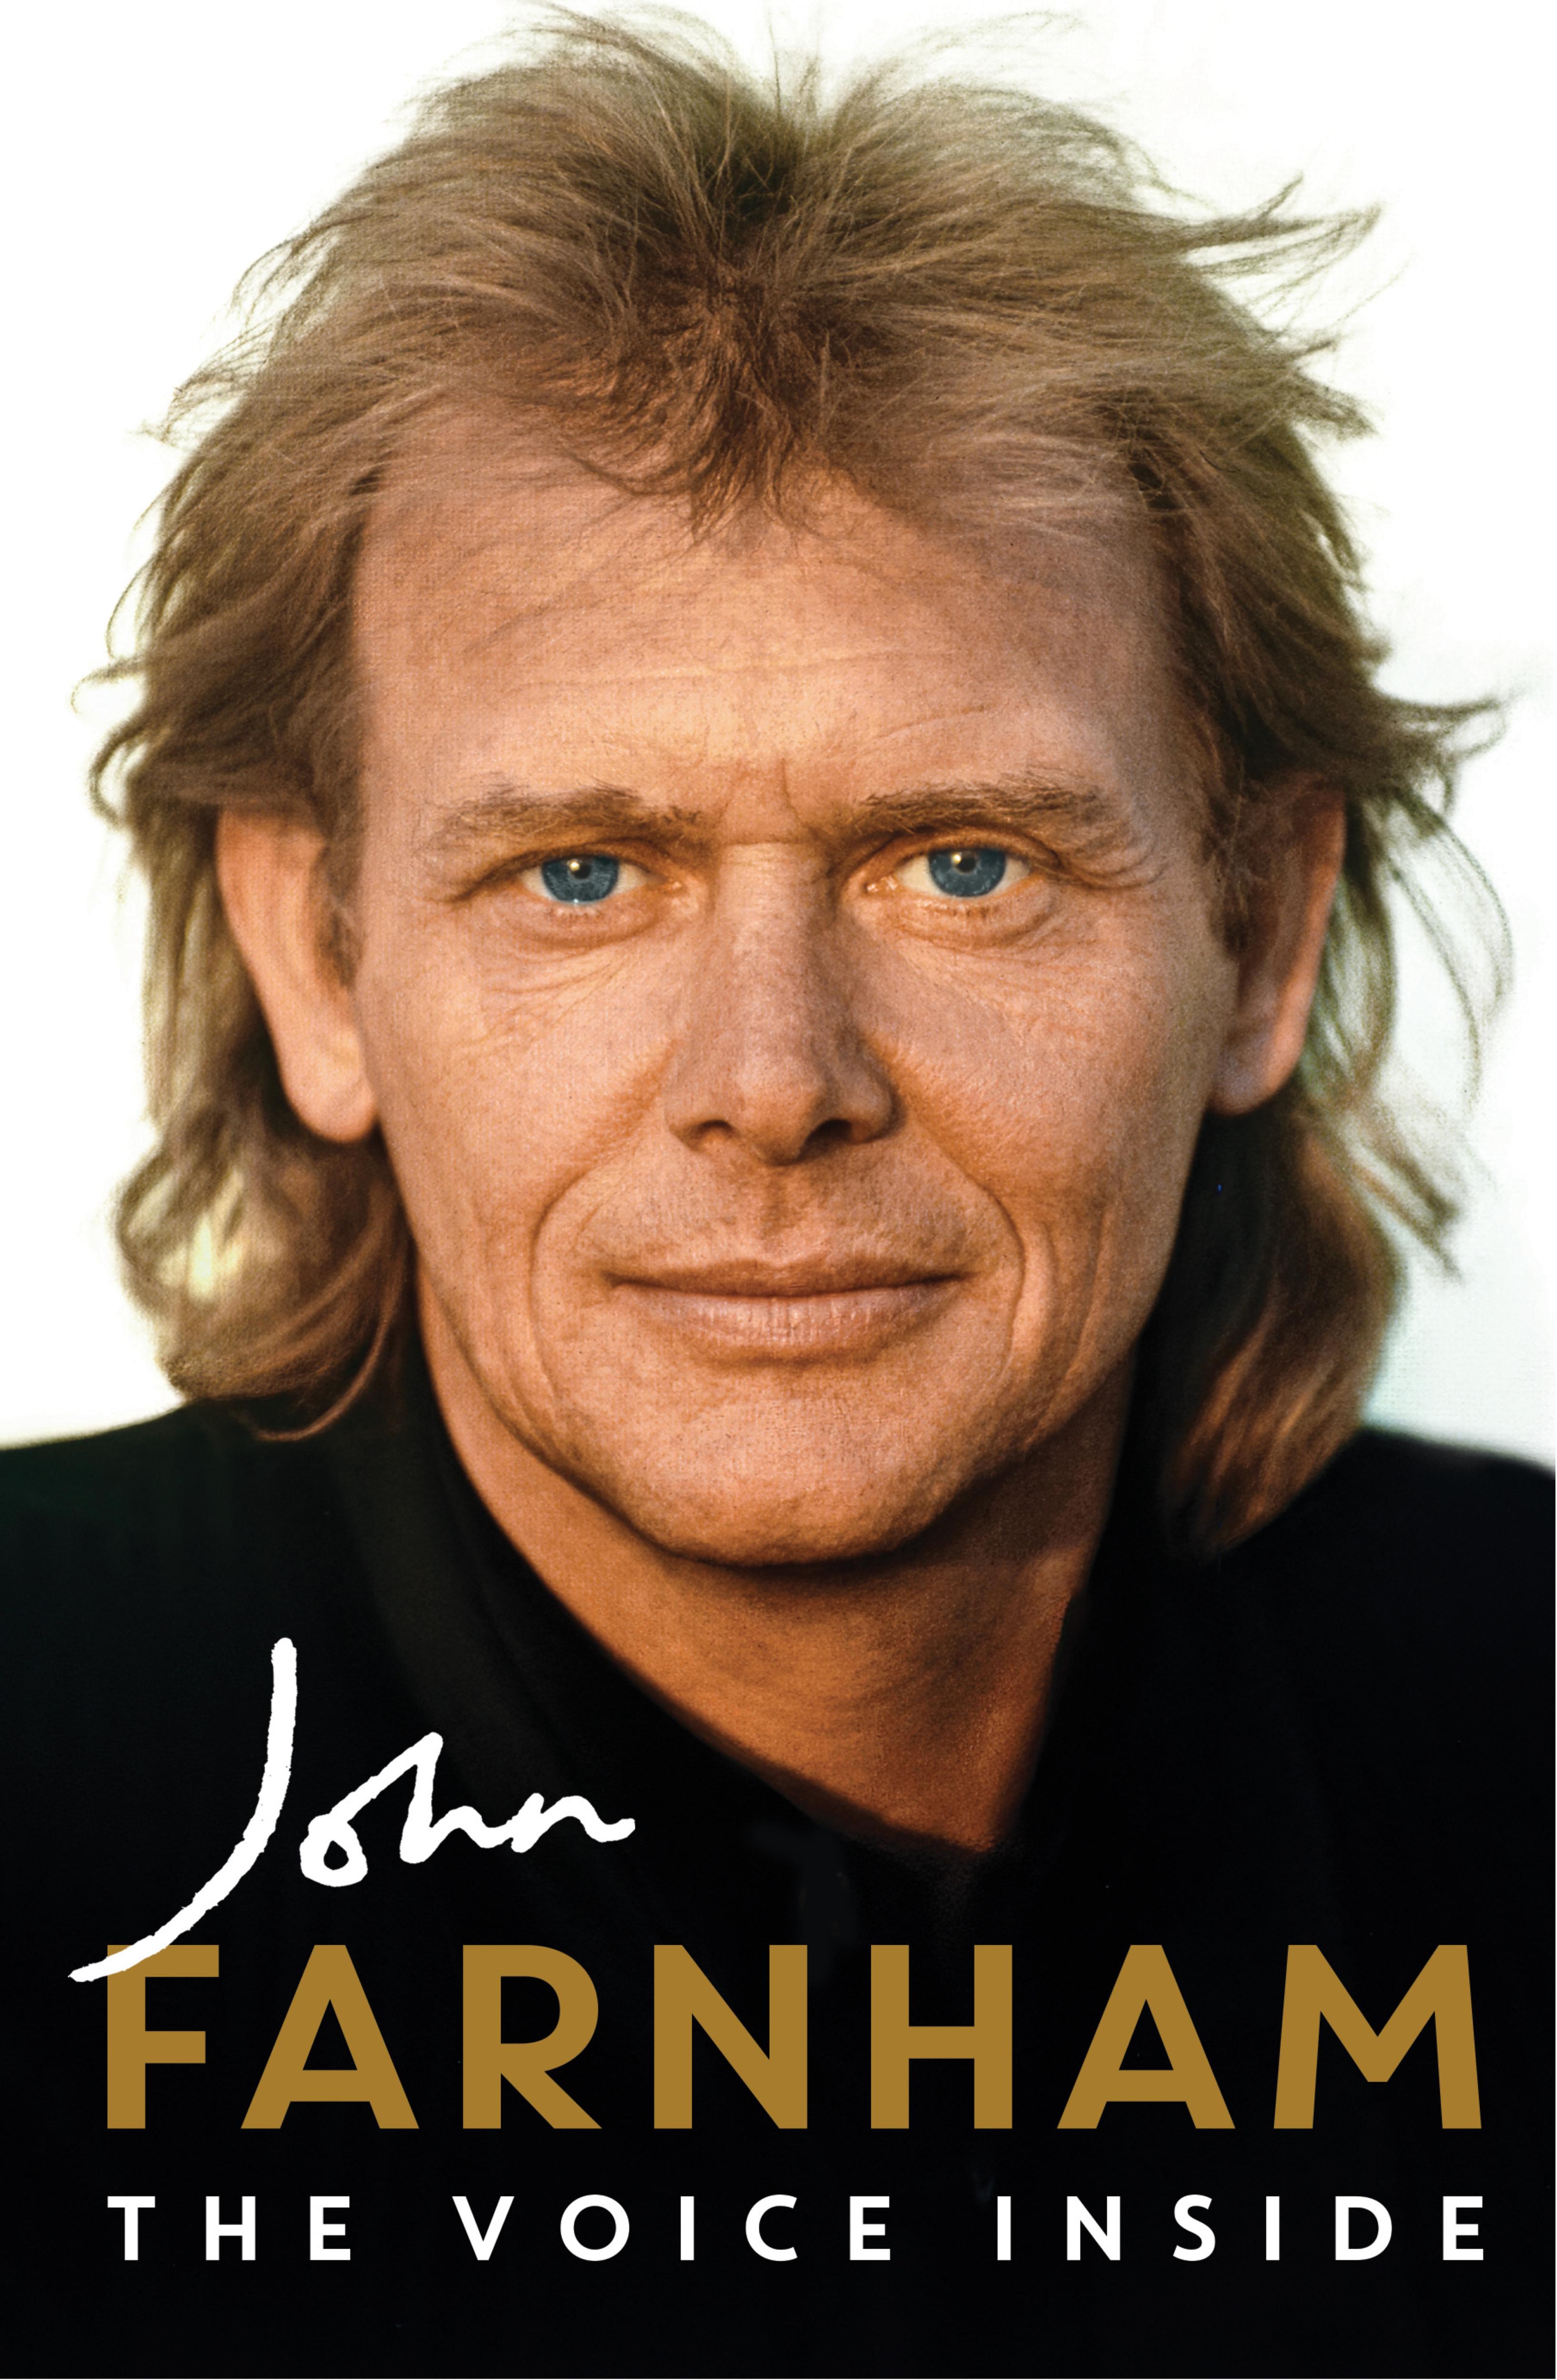 a headshot of singer john farnham on the cover of a book with text john farnham the voice inside